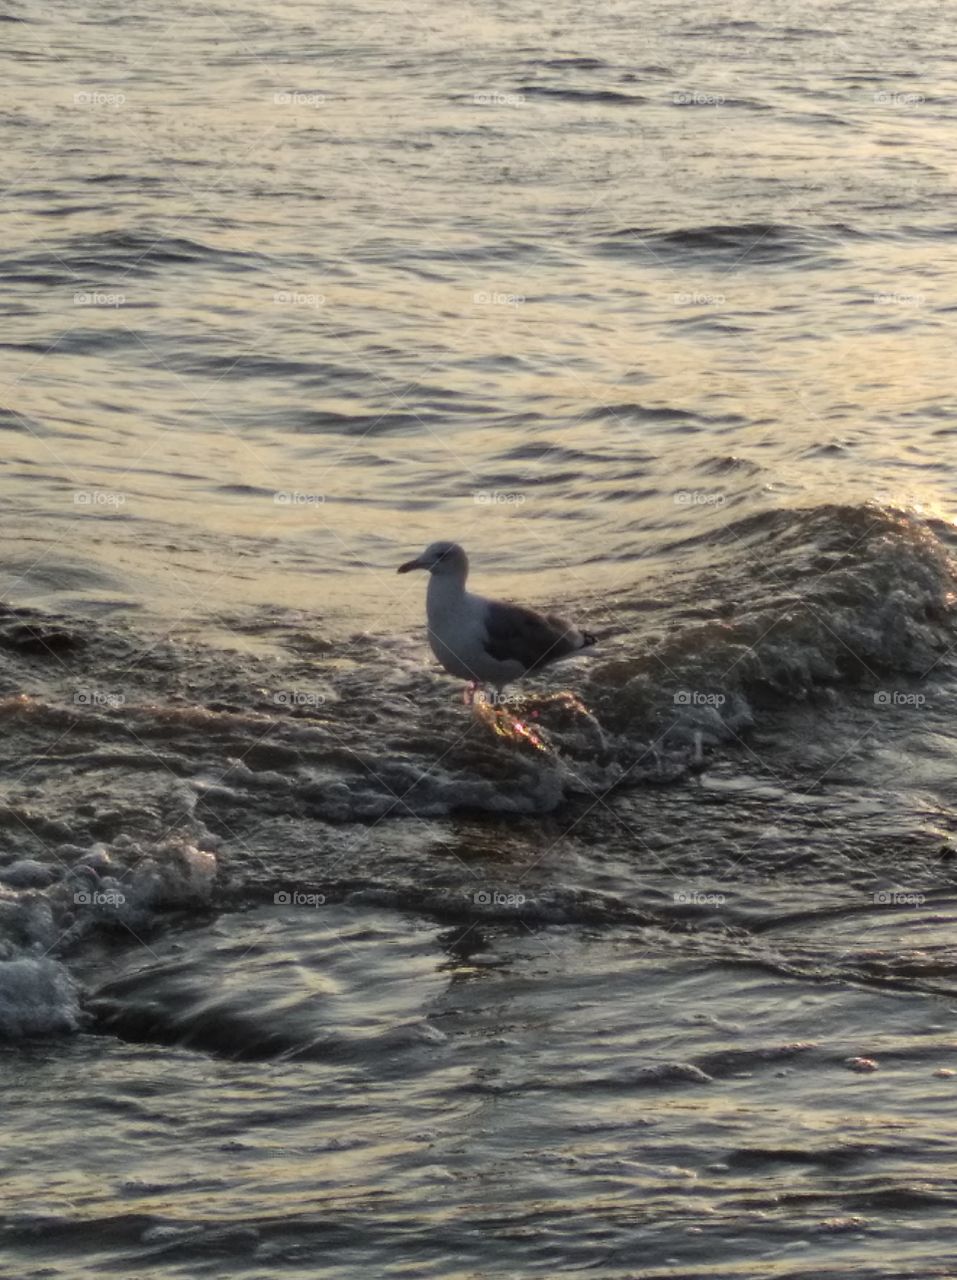 The seagull is splashing